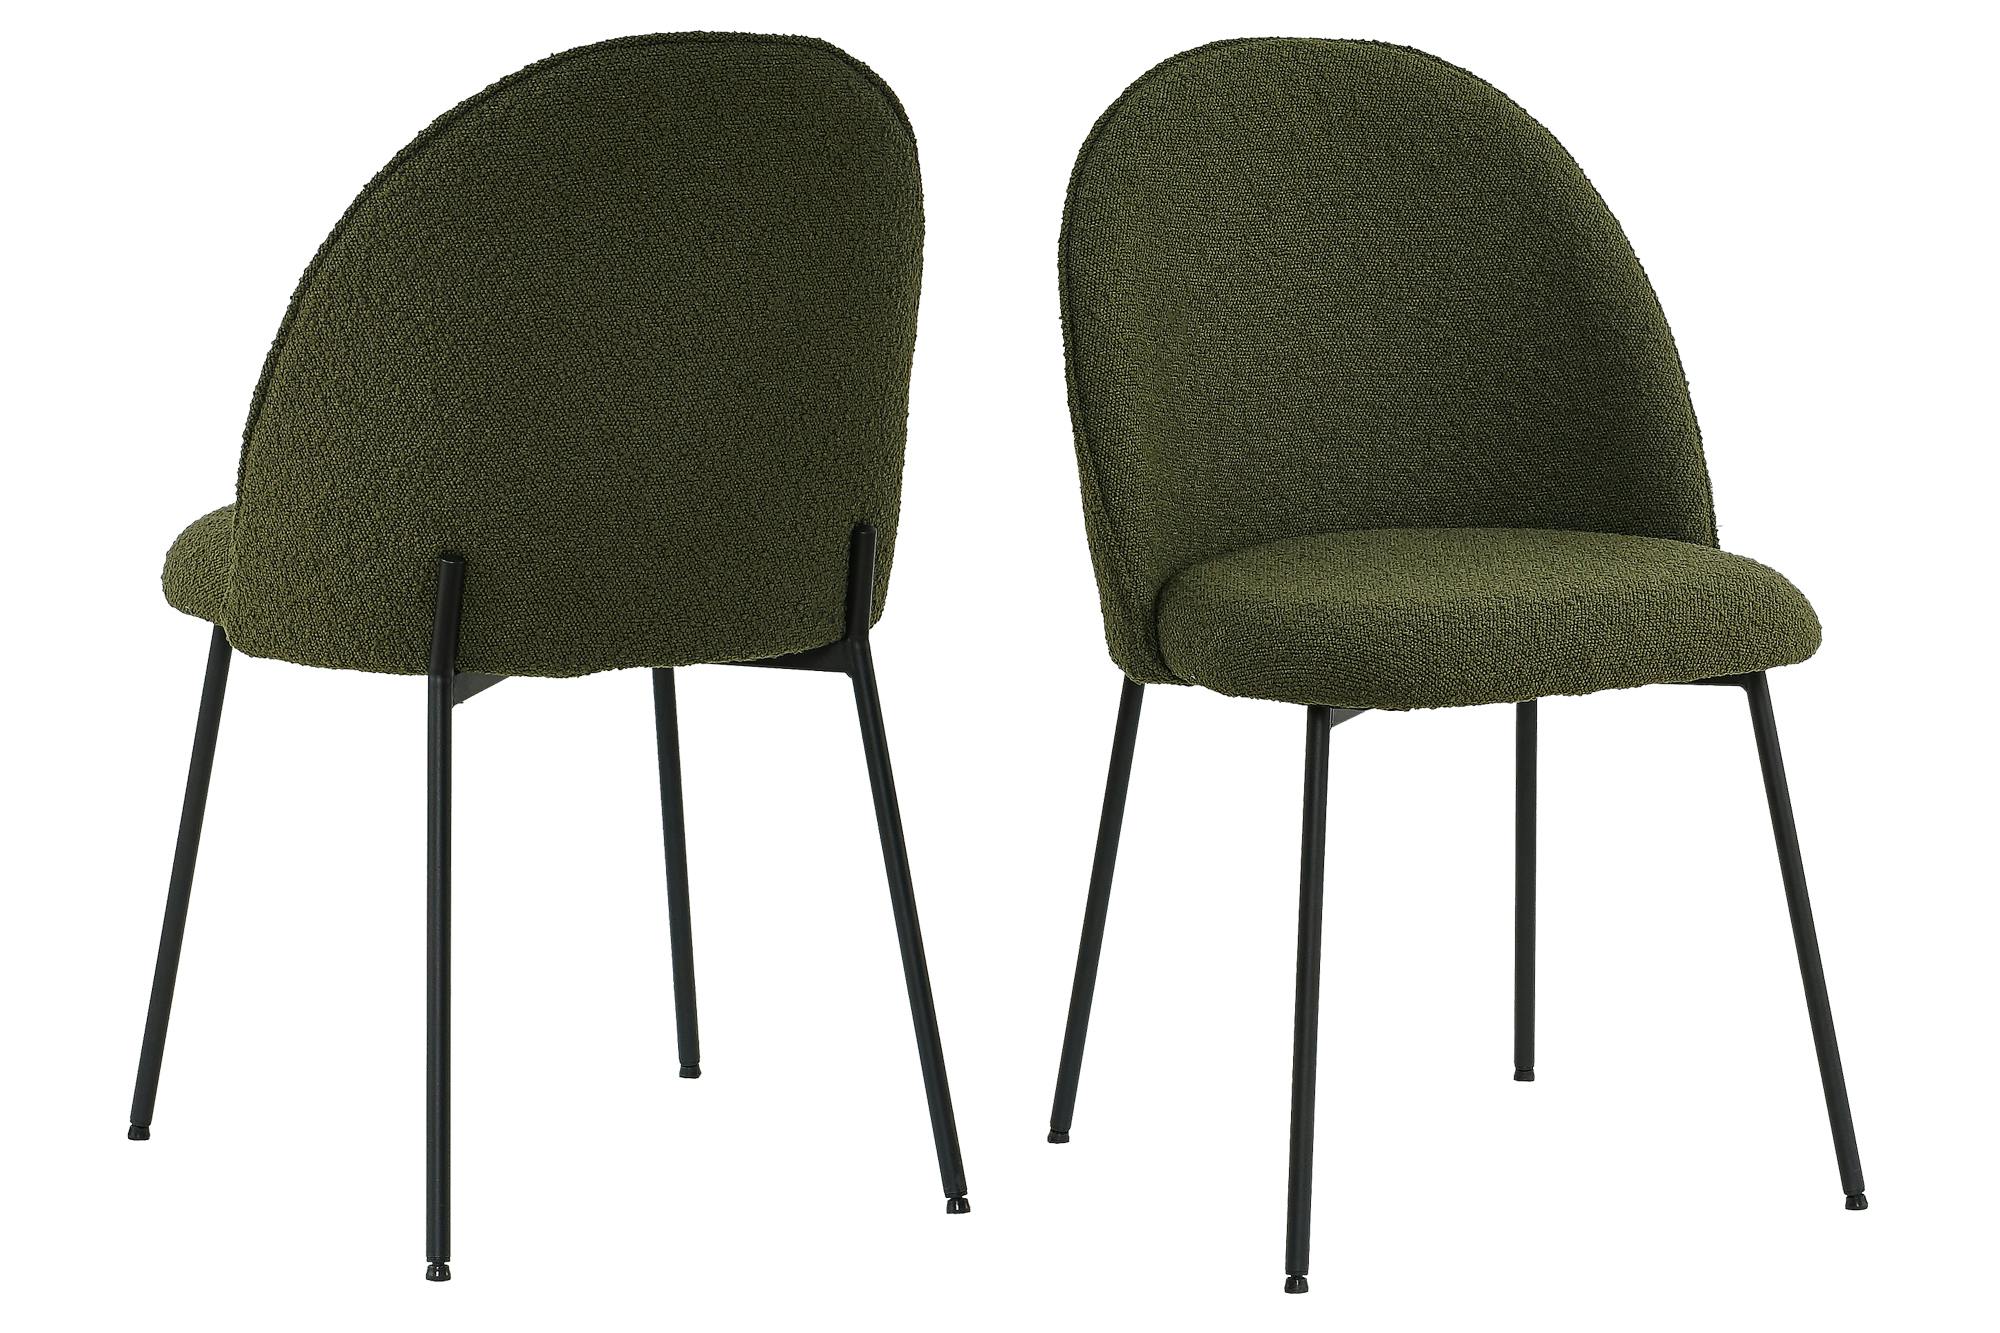 SIT Möbel Tom Tailor | gepolstert METRO Metall B57xT54xH52cm Chair | Marktplatz | Pad |02412-03 | T-Bouclé 2er-Set Stuhl Beine |Serie grün| SIT&CHAIRS schwarz